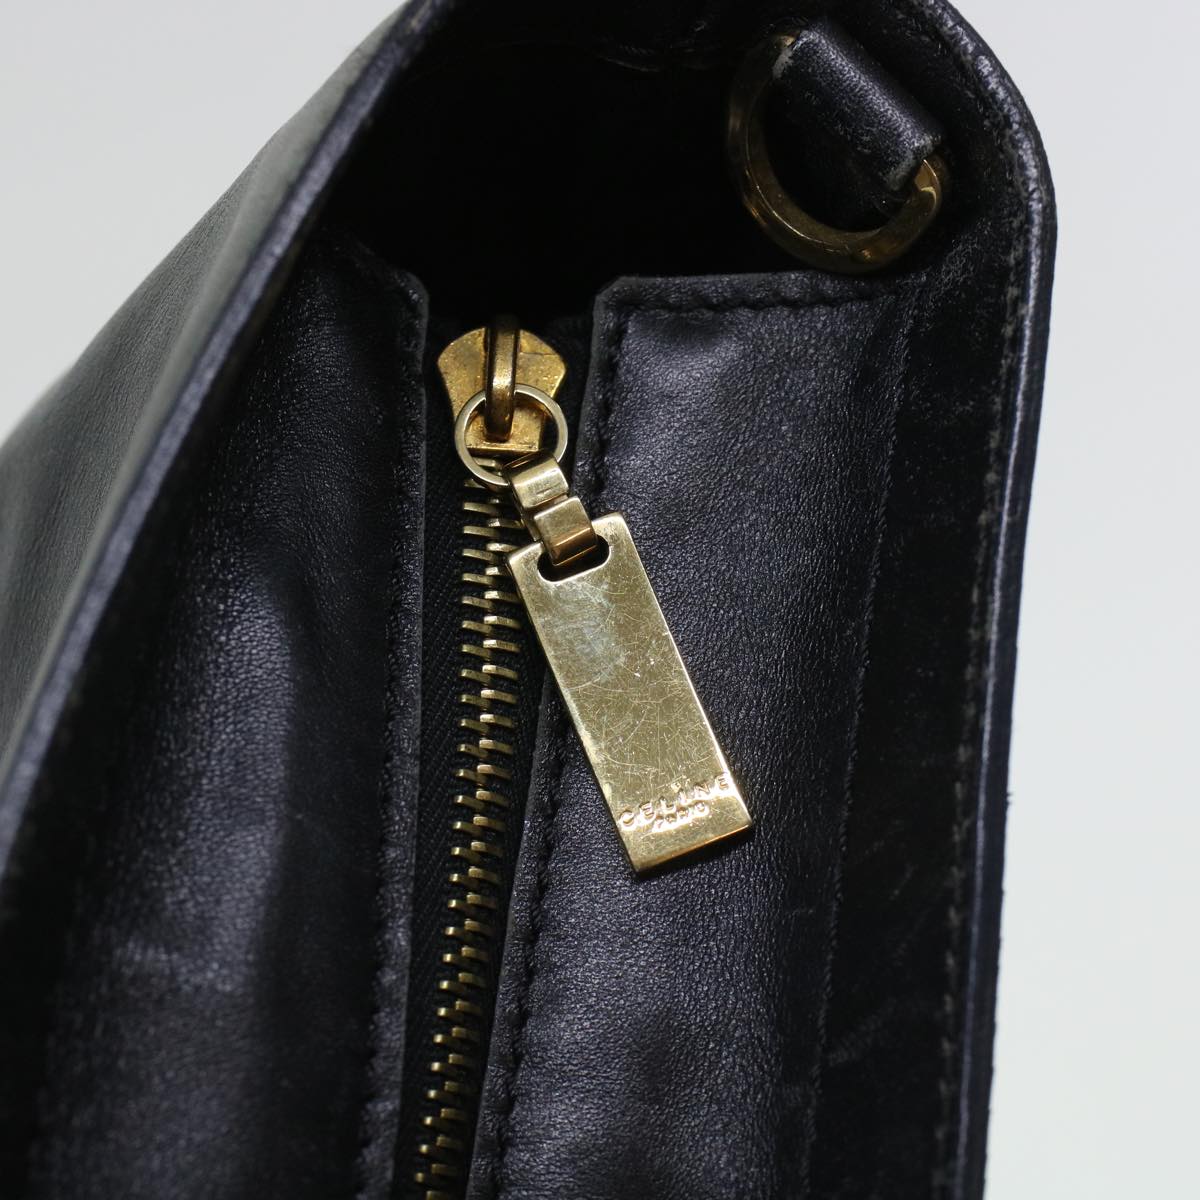 CELINE Tote Bag Leather 2way Black Auth 44998